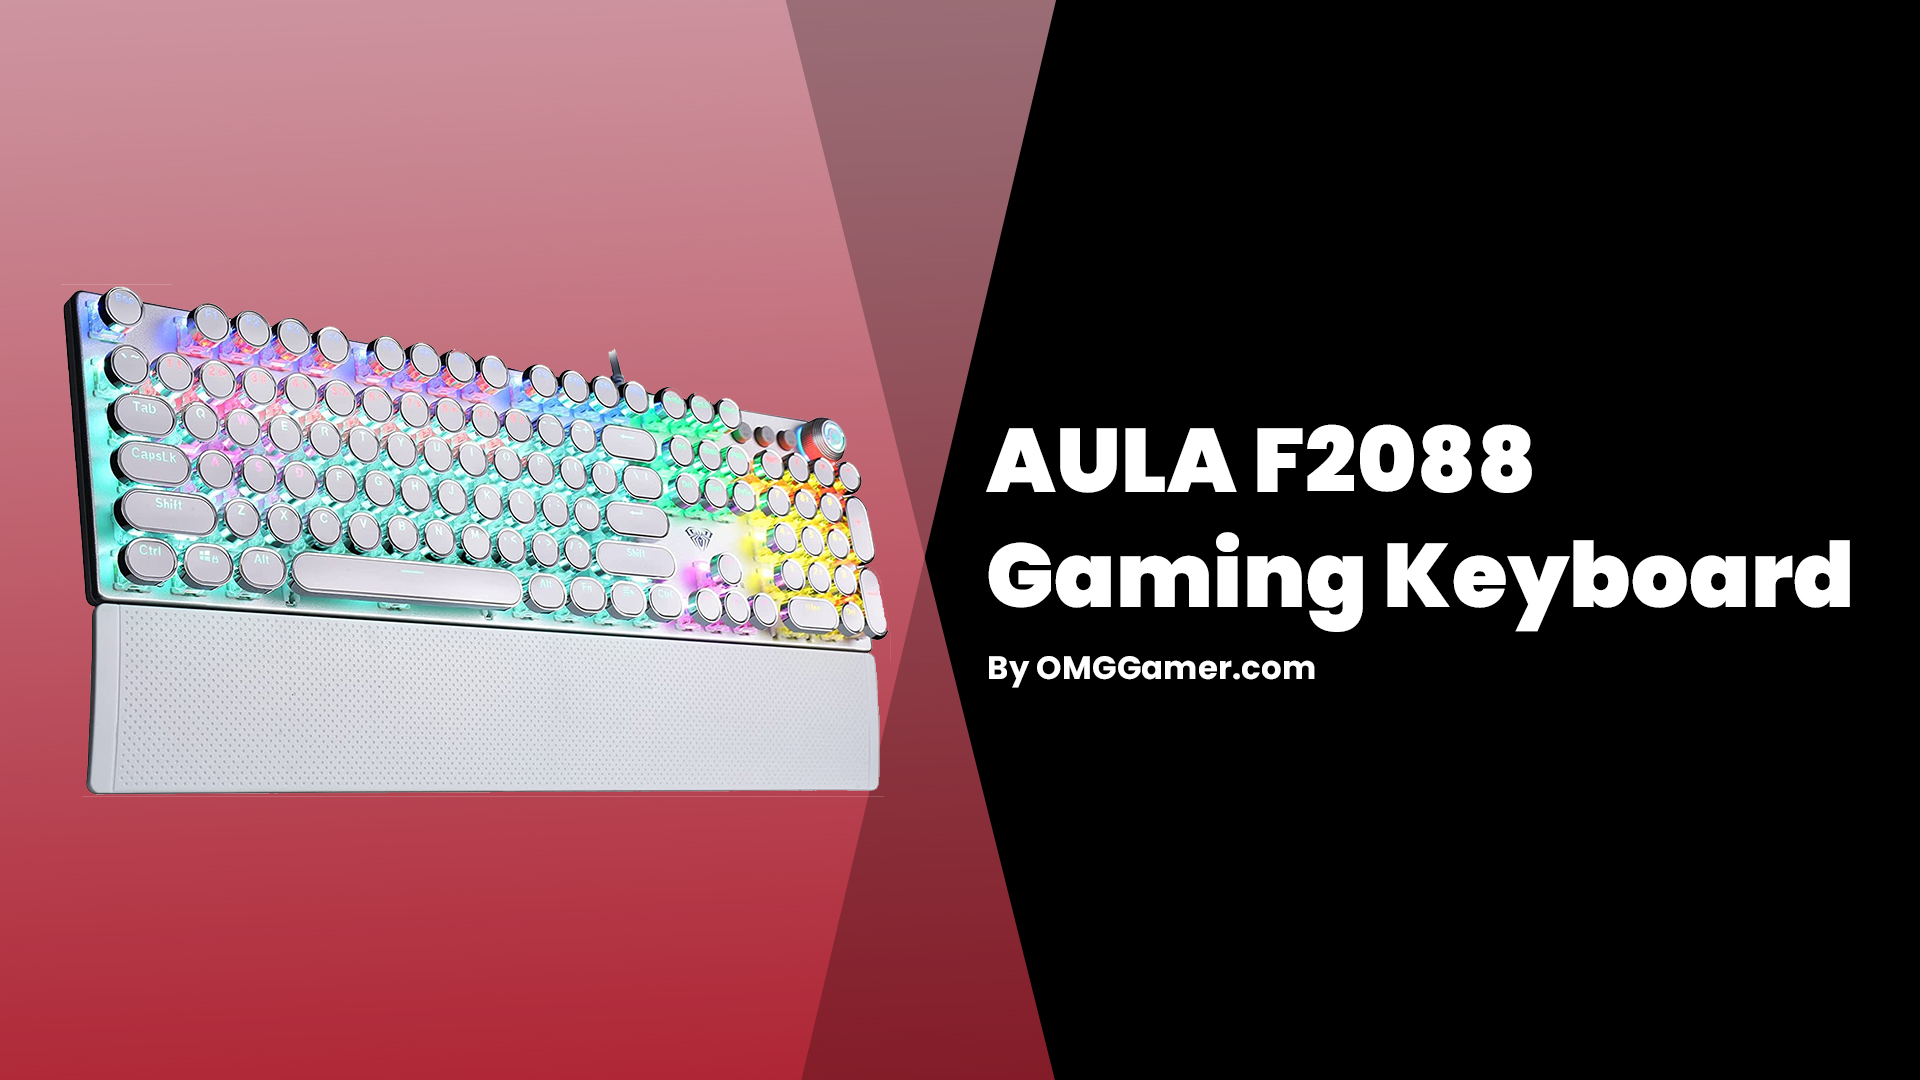 AULA F2088 Gaming Keyboard